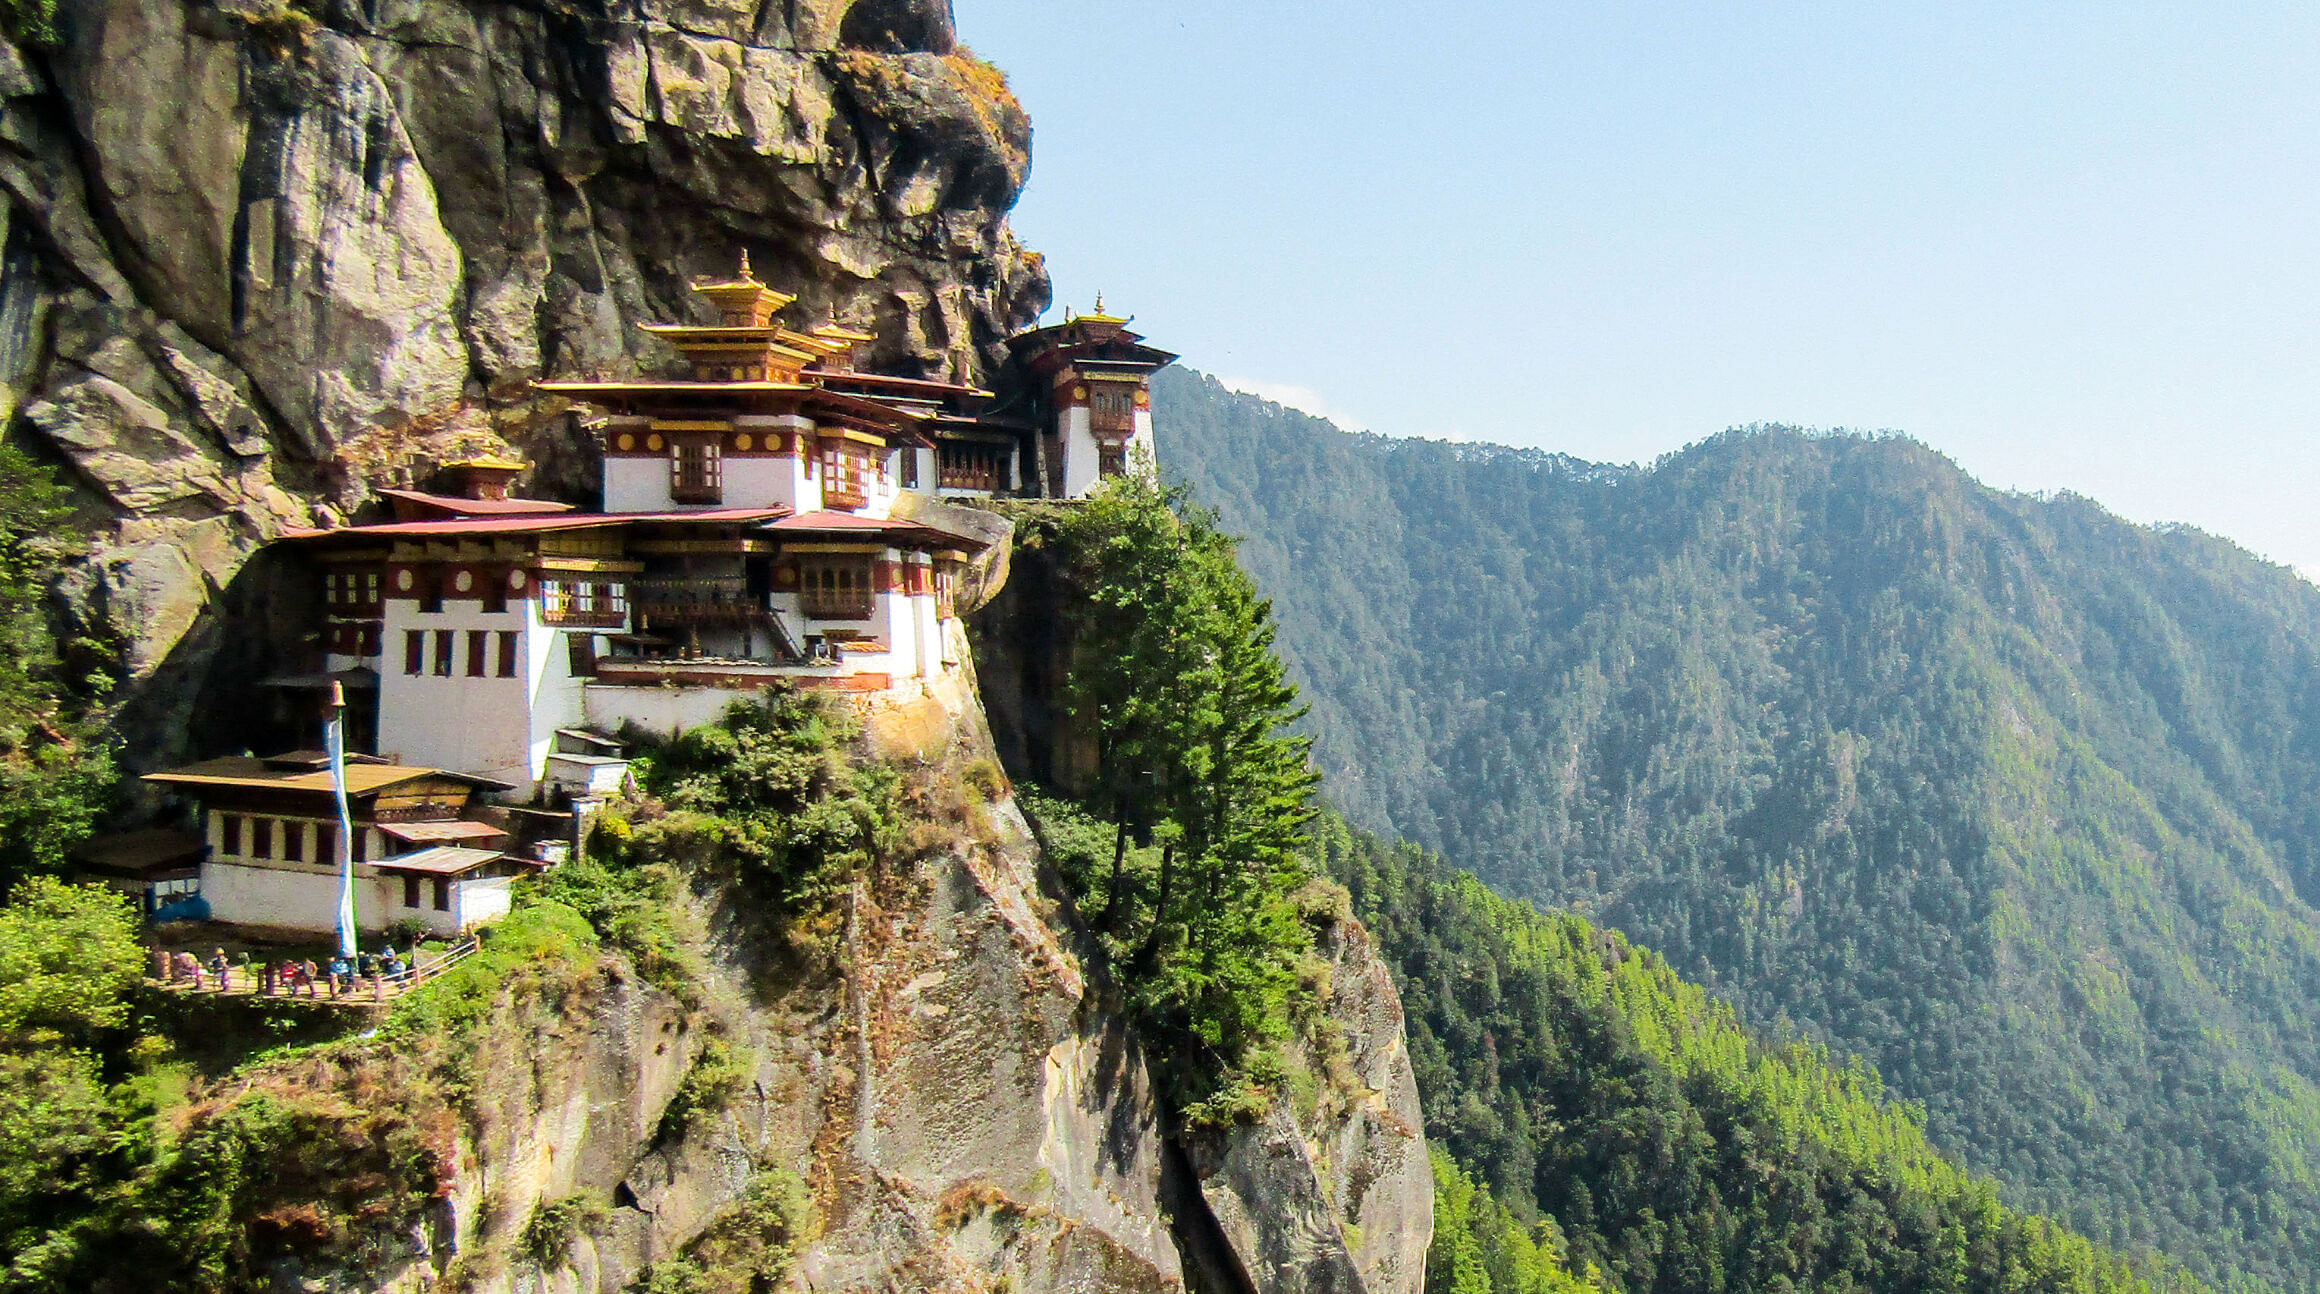 Tiger's Nest Monastery in Paro Valley, Bhutan